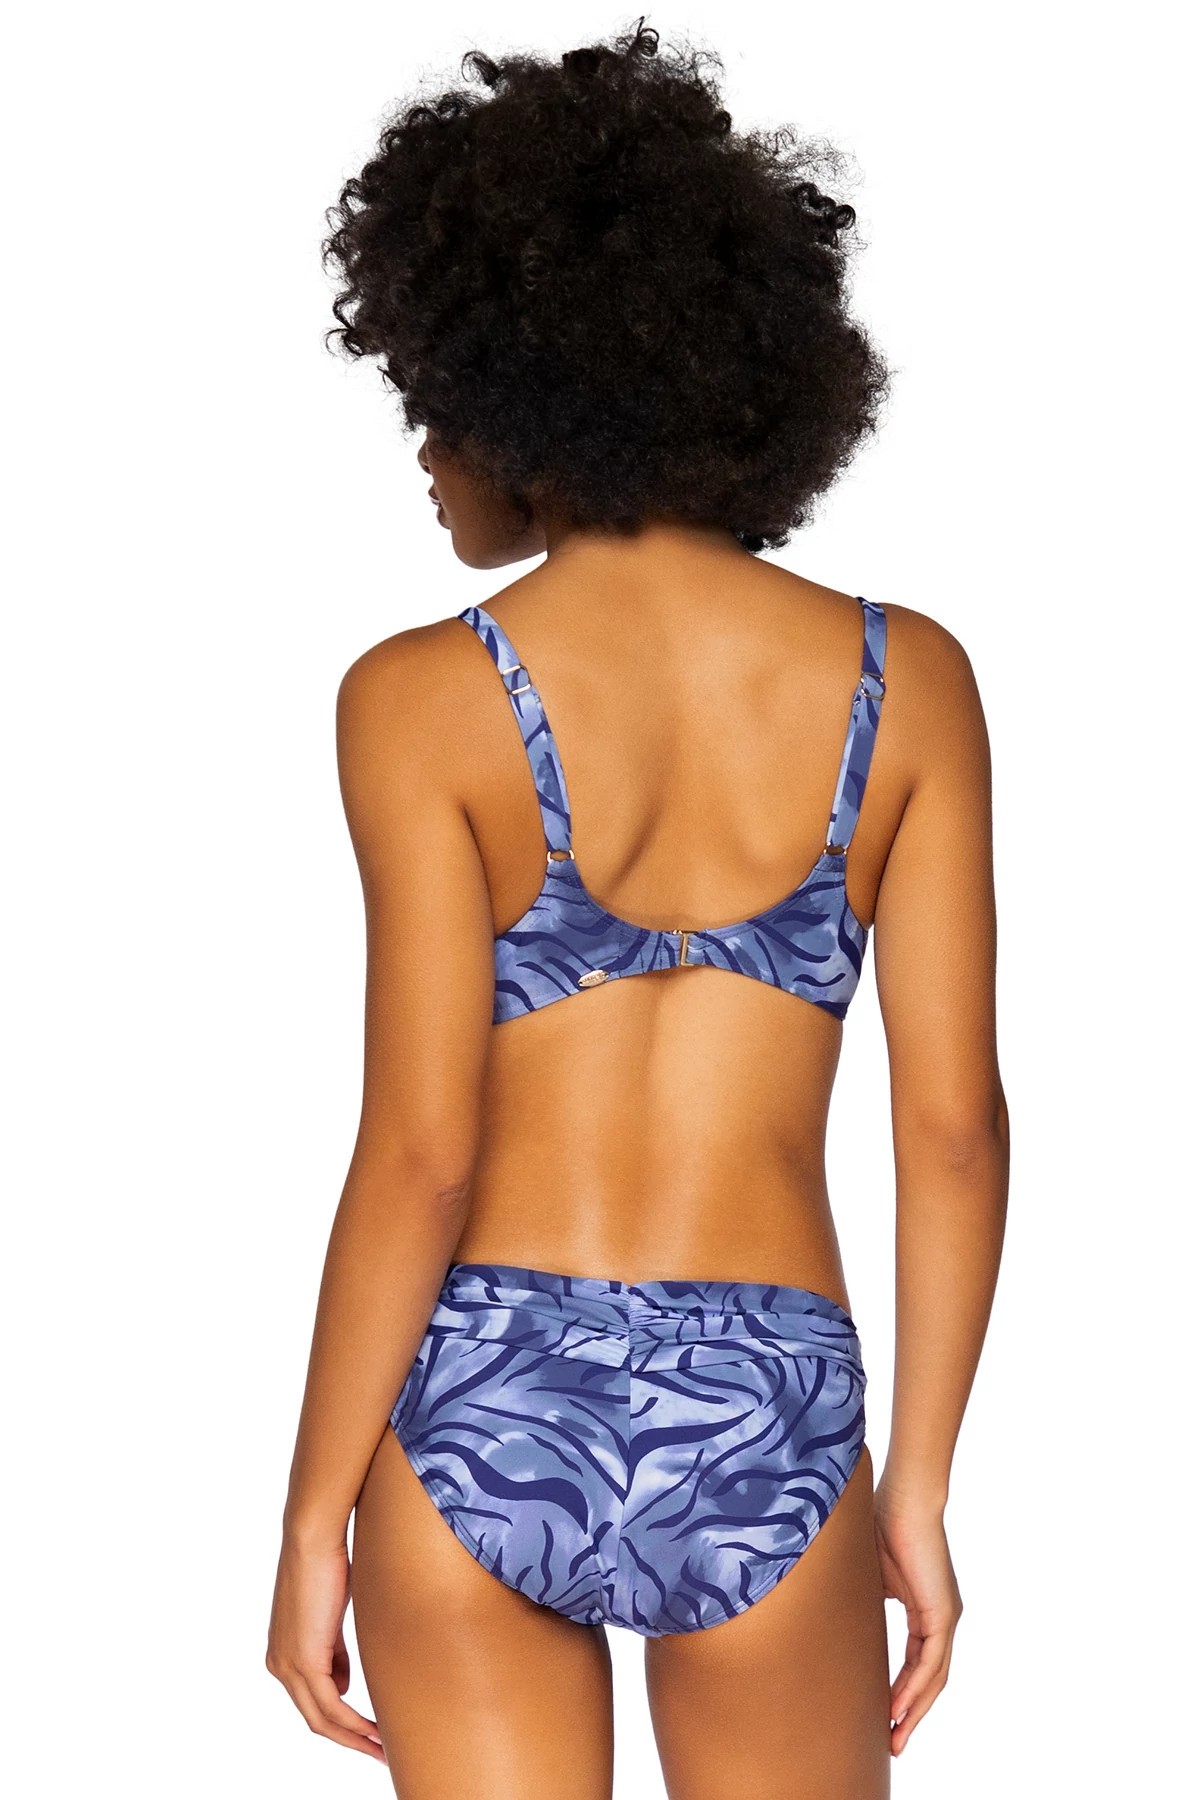 SUMATRA Carmen Underwire Bikini Top (E-H Cup) image number 2